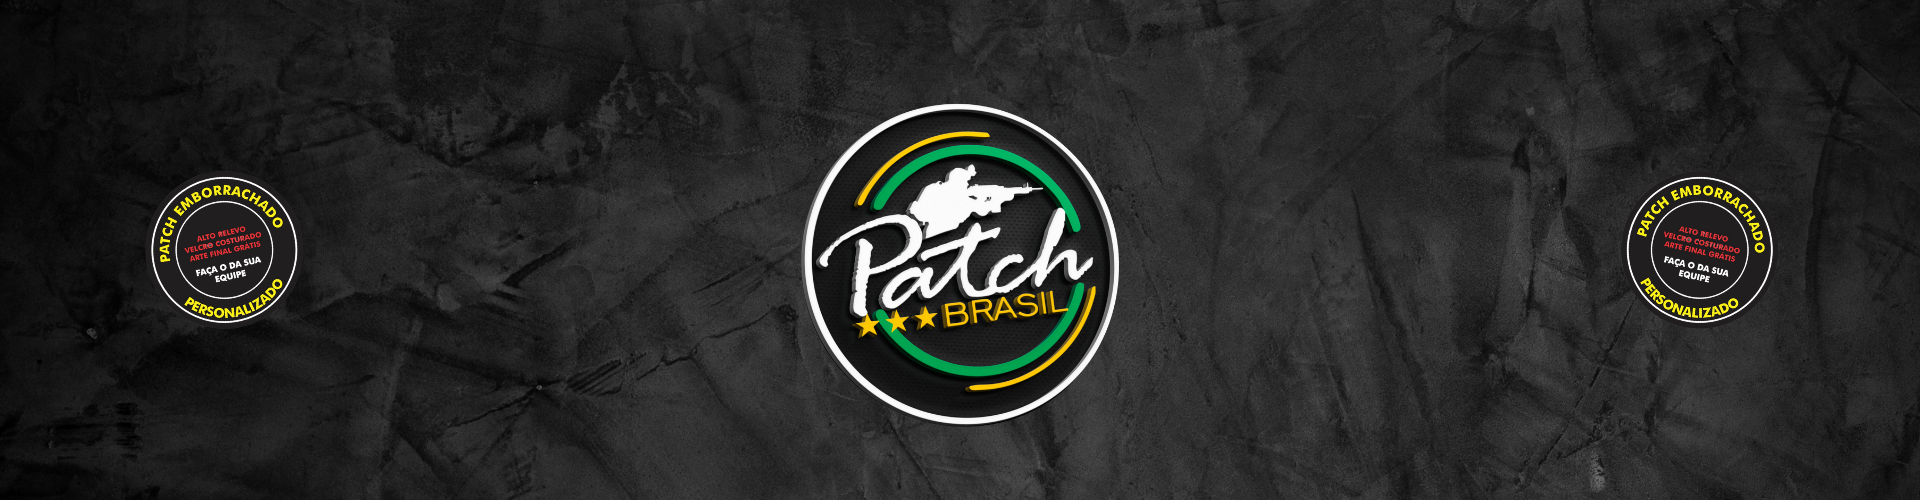 PATCH BRASIL - COPA PROARMAS